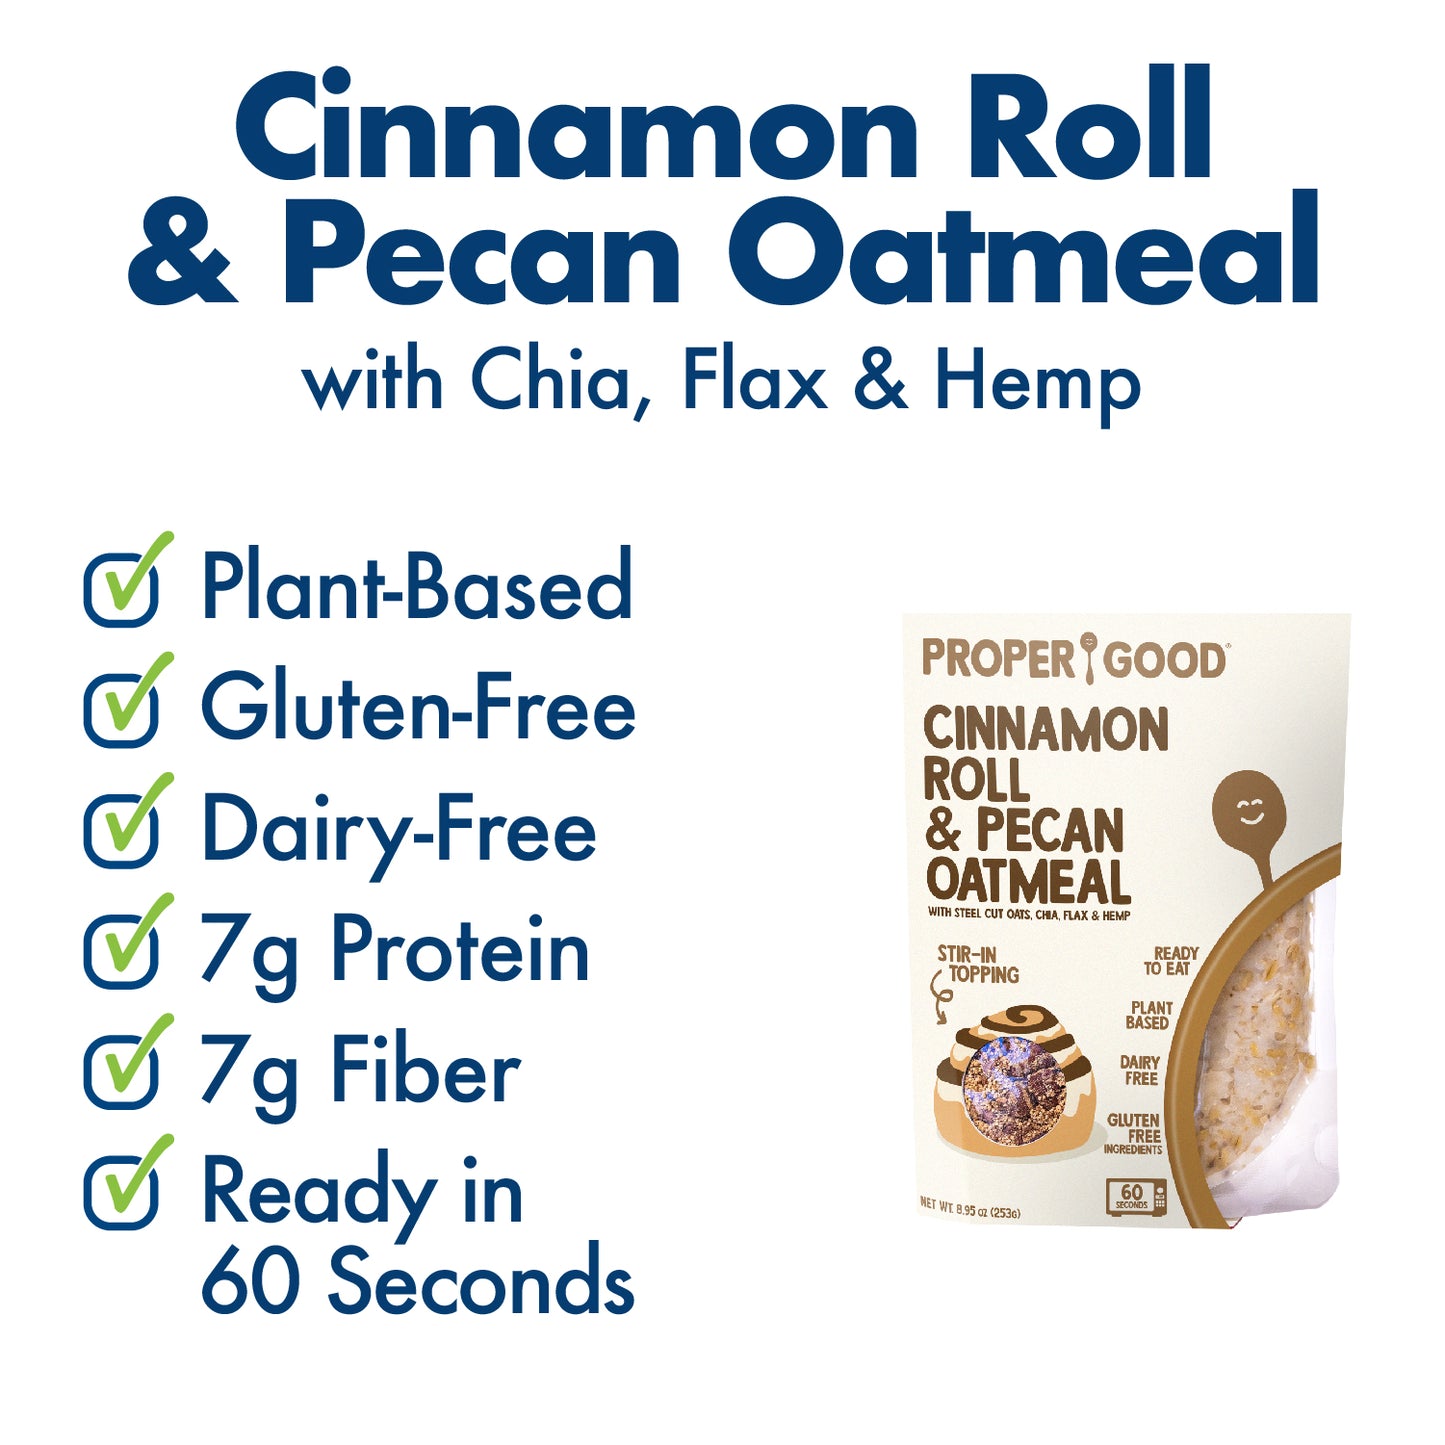 Cinnamon Roll & Pecan Oatmeal Benefits - Eat Proper Good